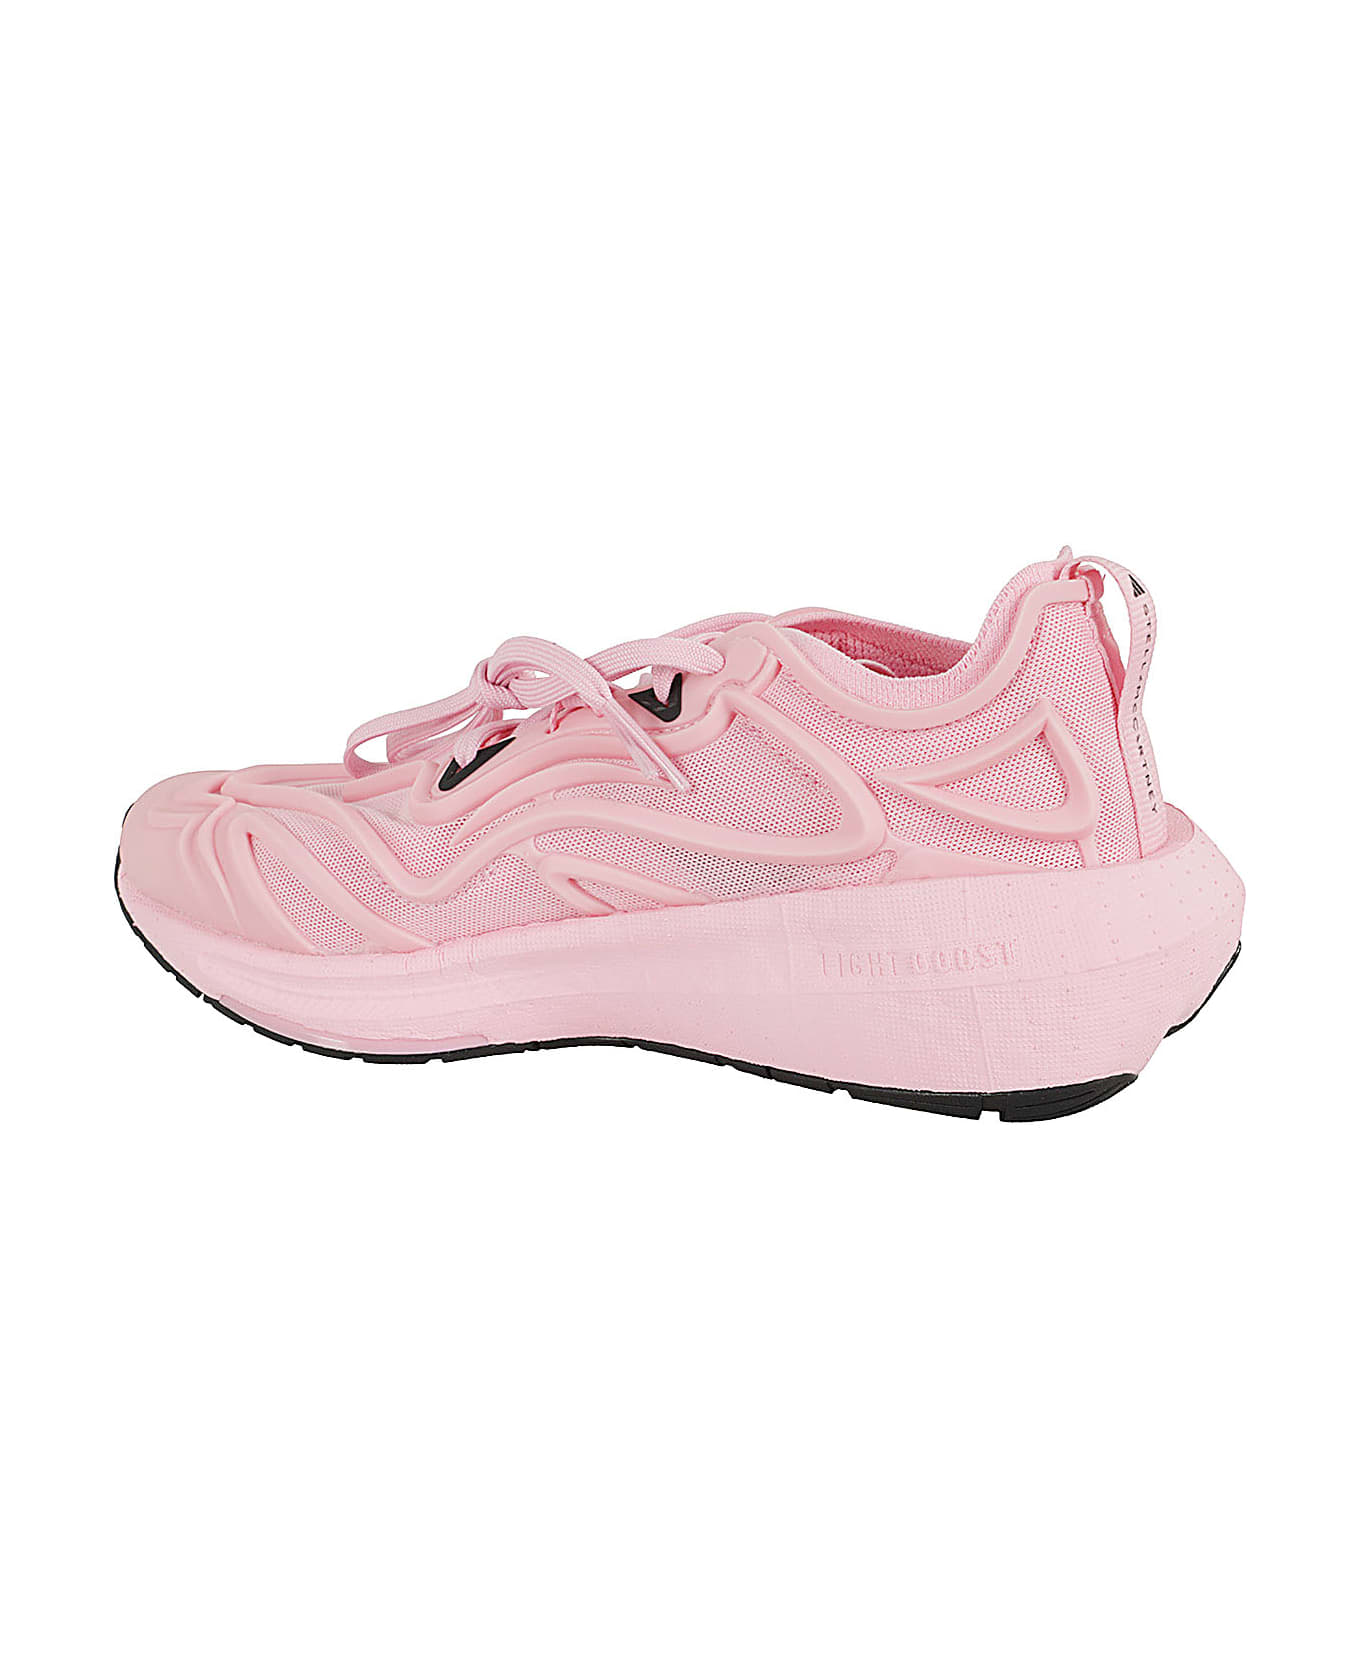 Adidas by Stella McCartney Ultraboost Speed - Pink